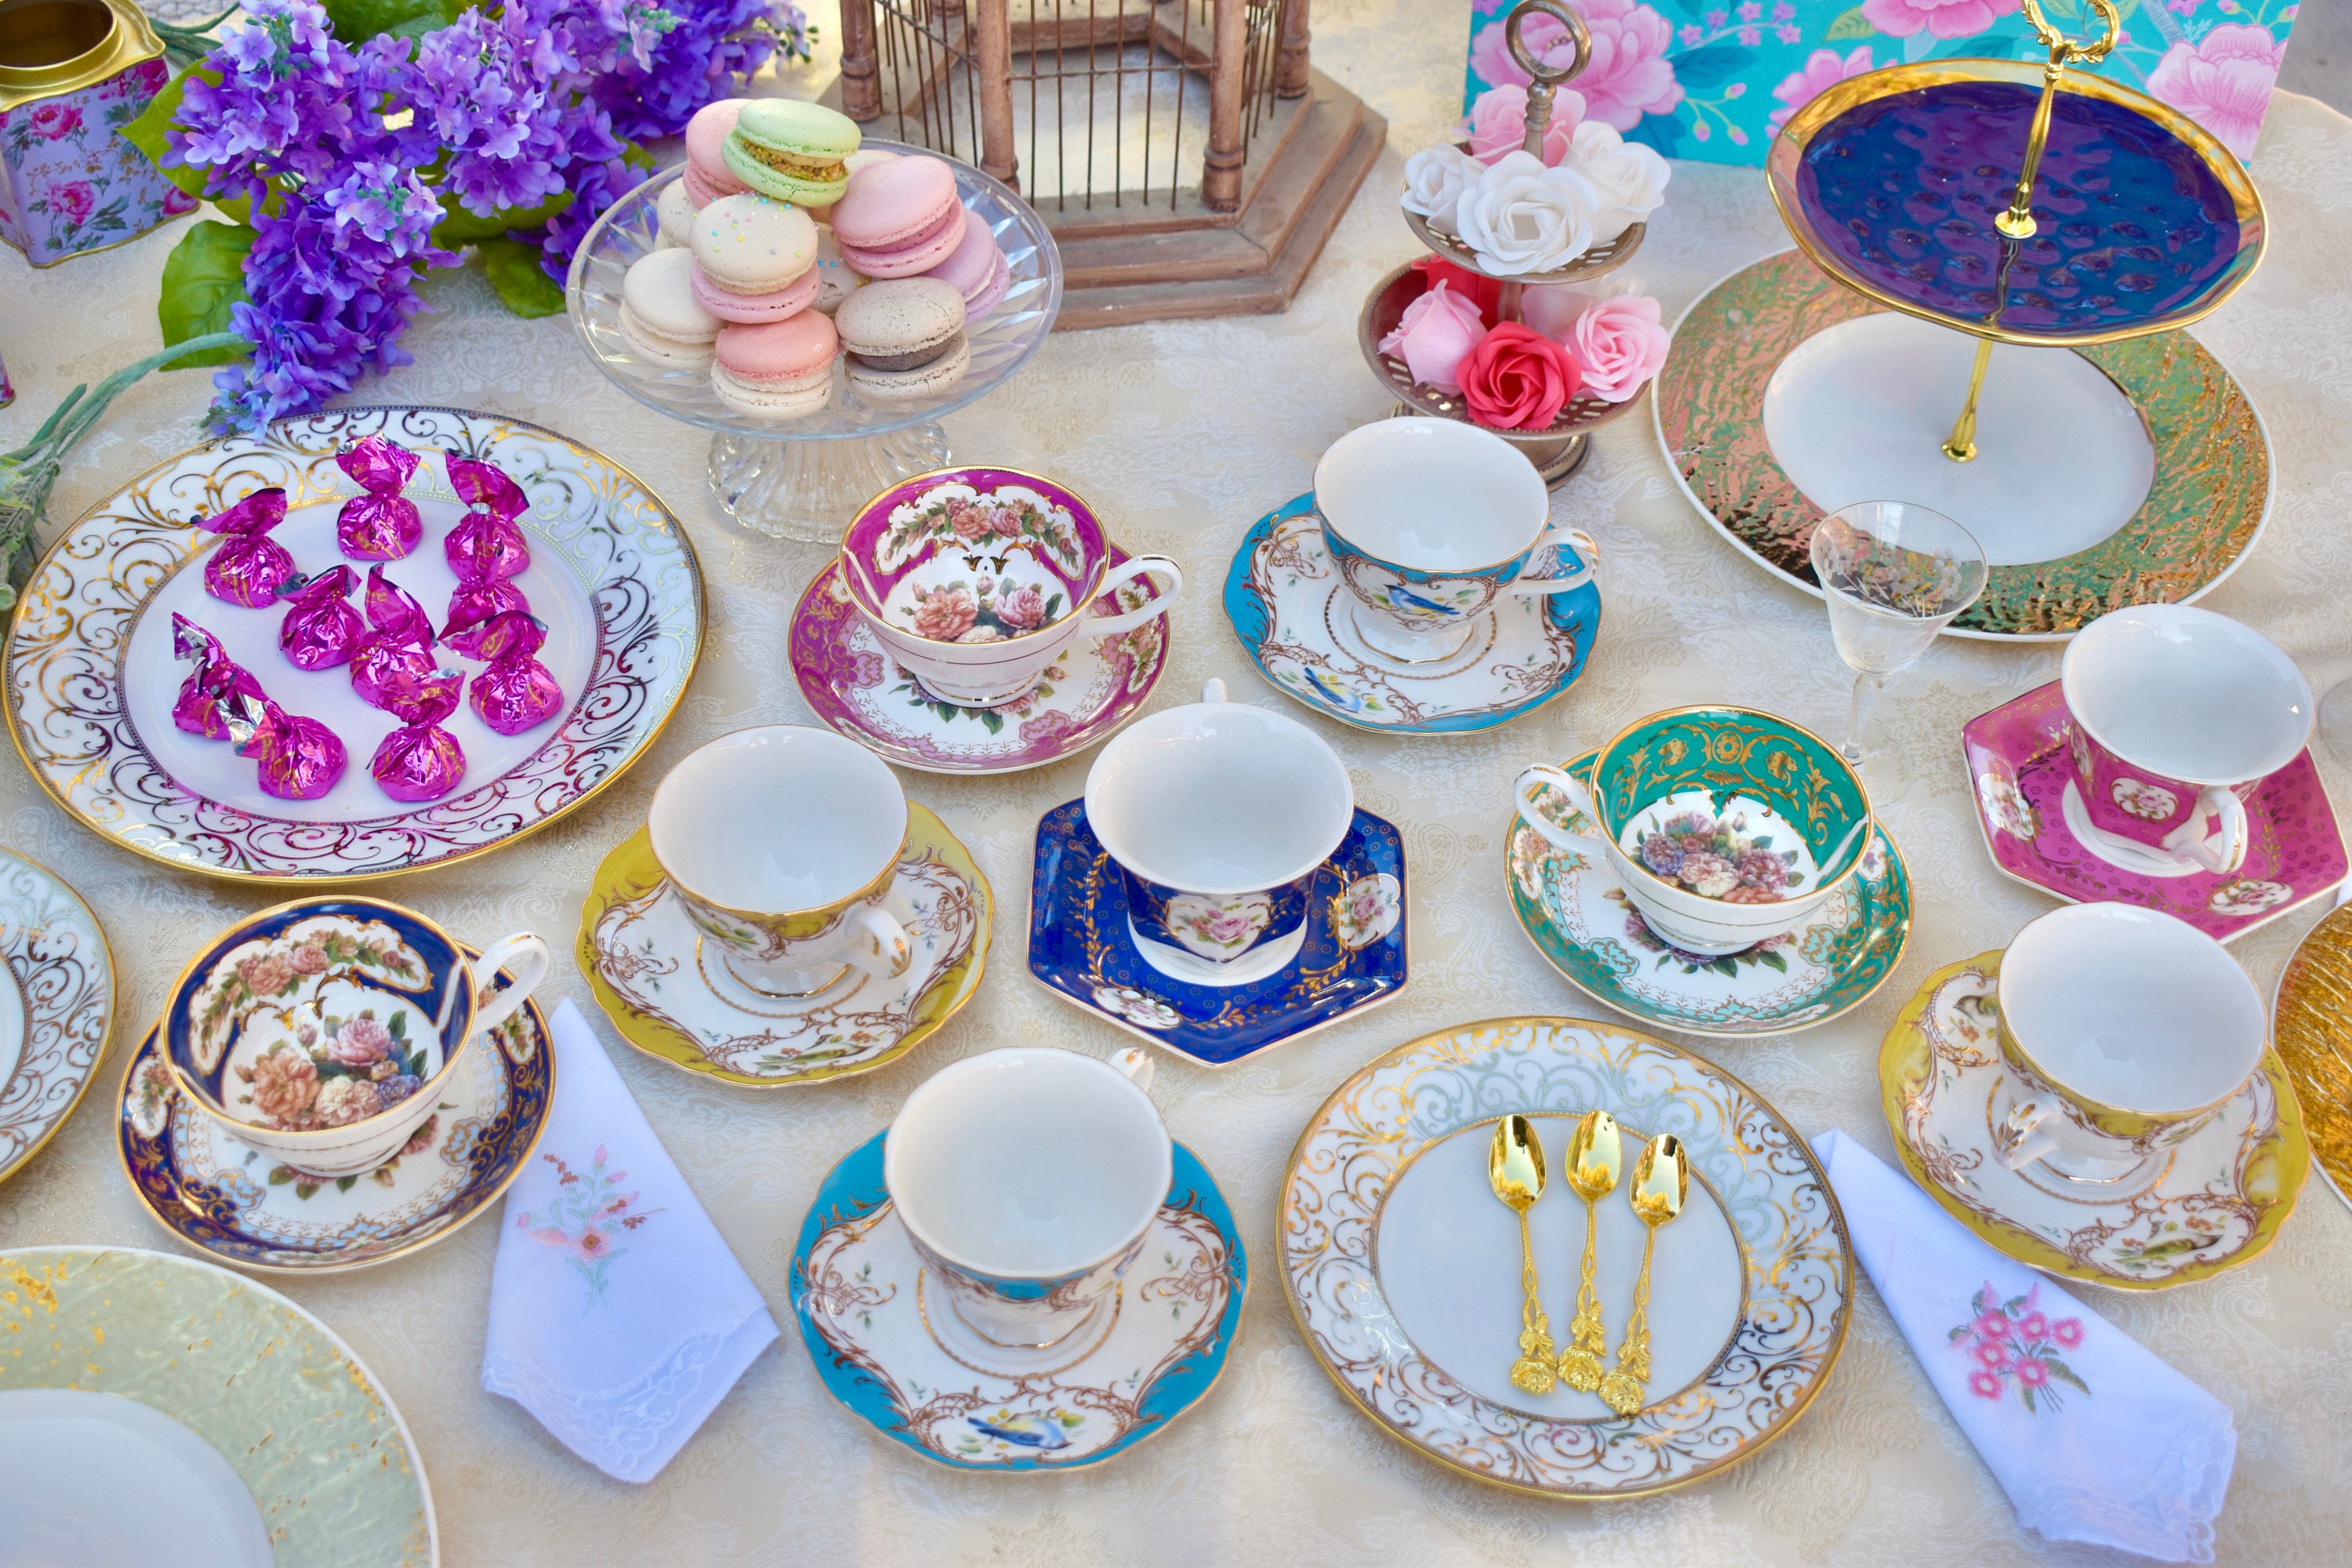 Teetering Teacups” Centerpiece #3 – MISS PARTY